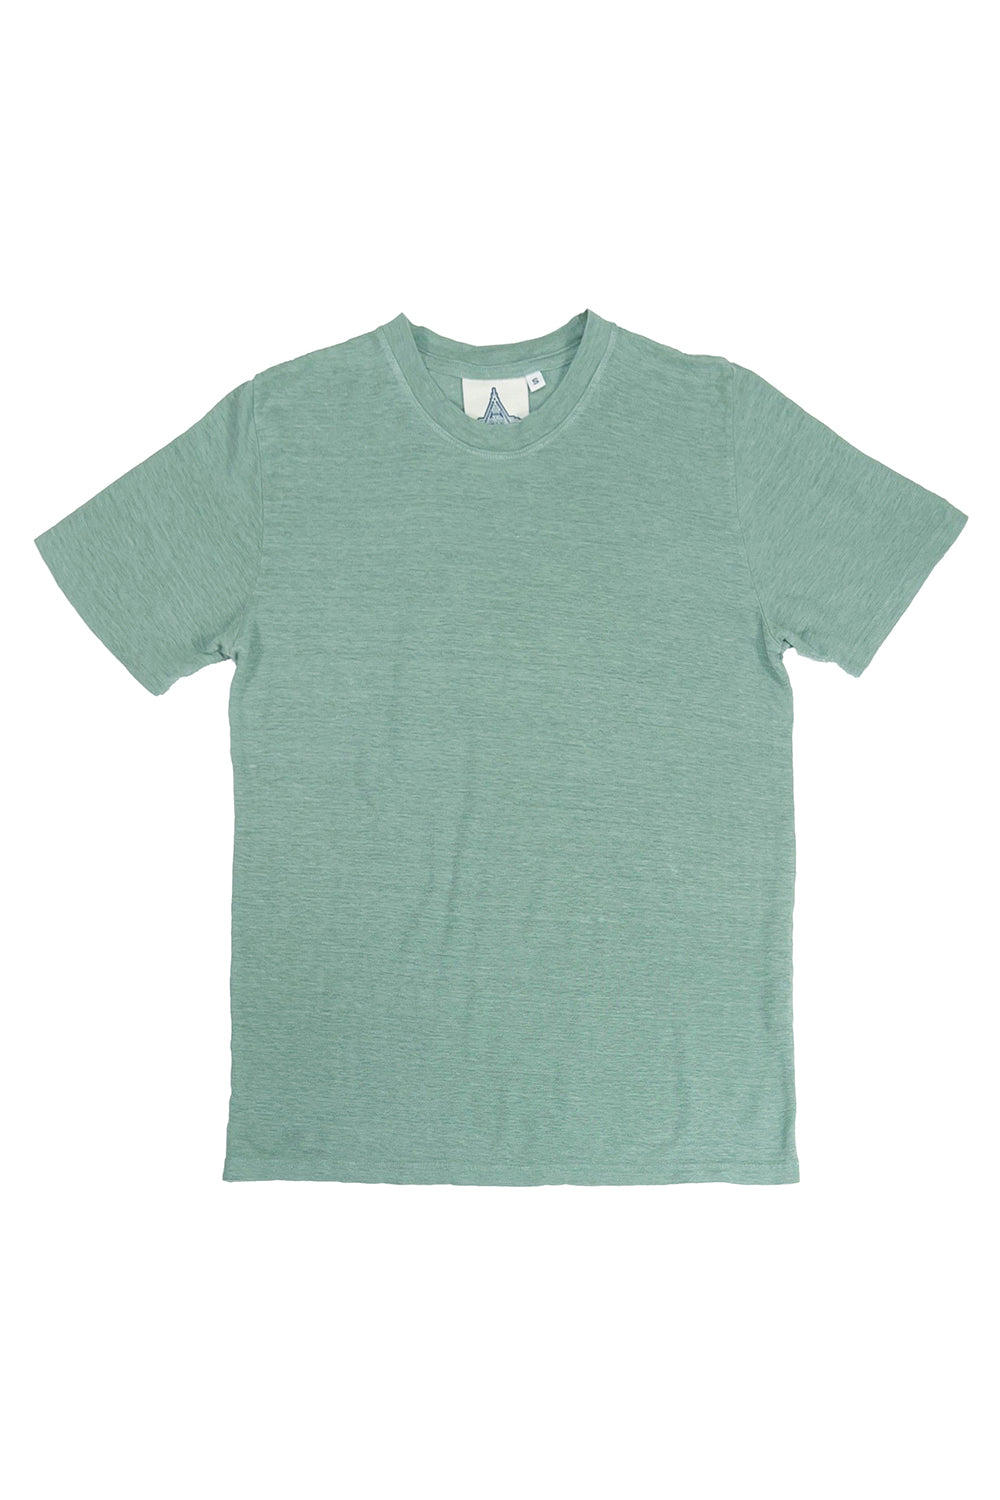 Mana 7 - 100% Hemp Tee | Jungmaven Hemp Clothing & Accessories / Color: Sage Green